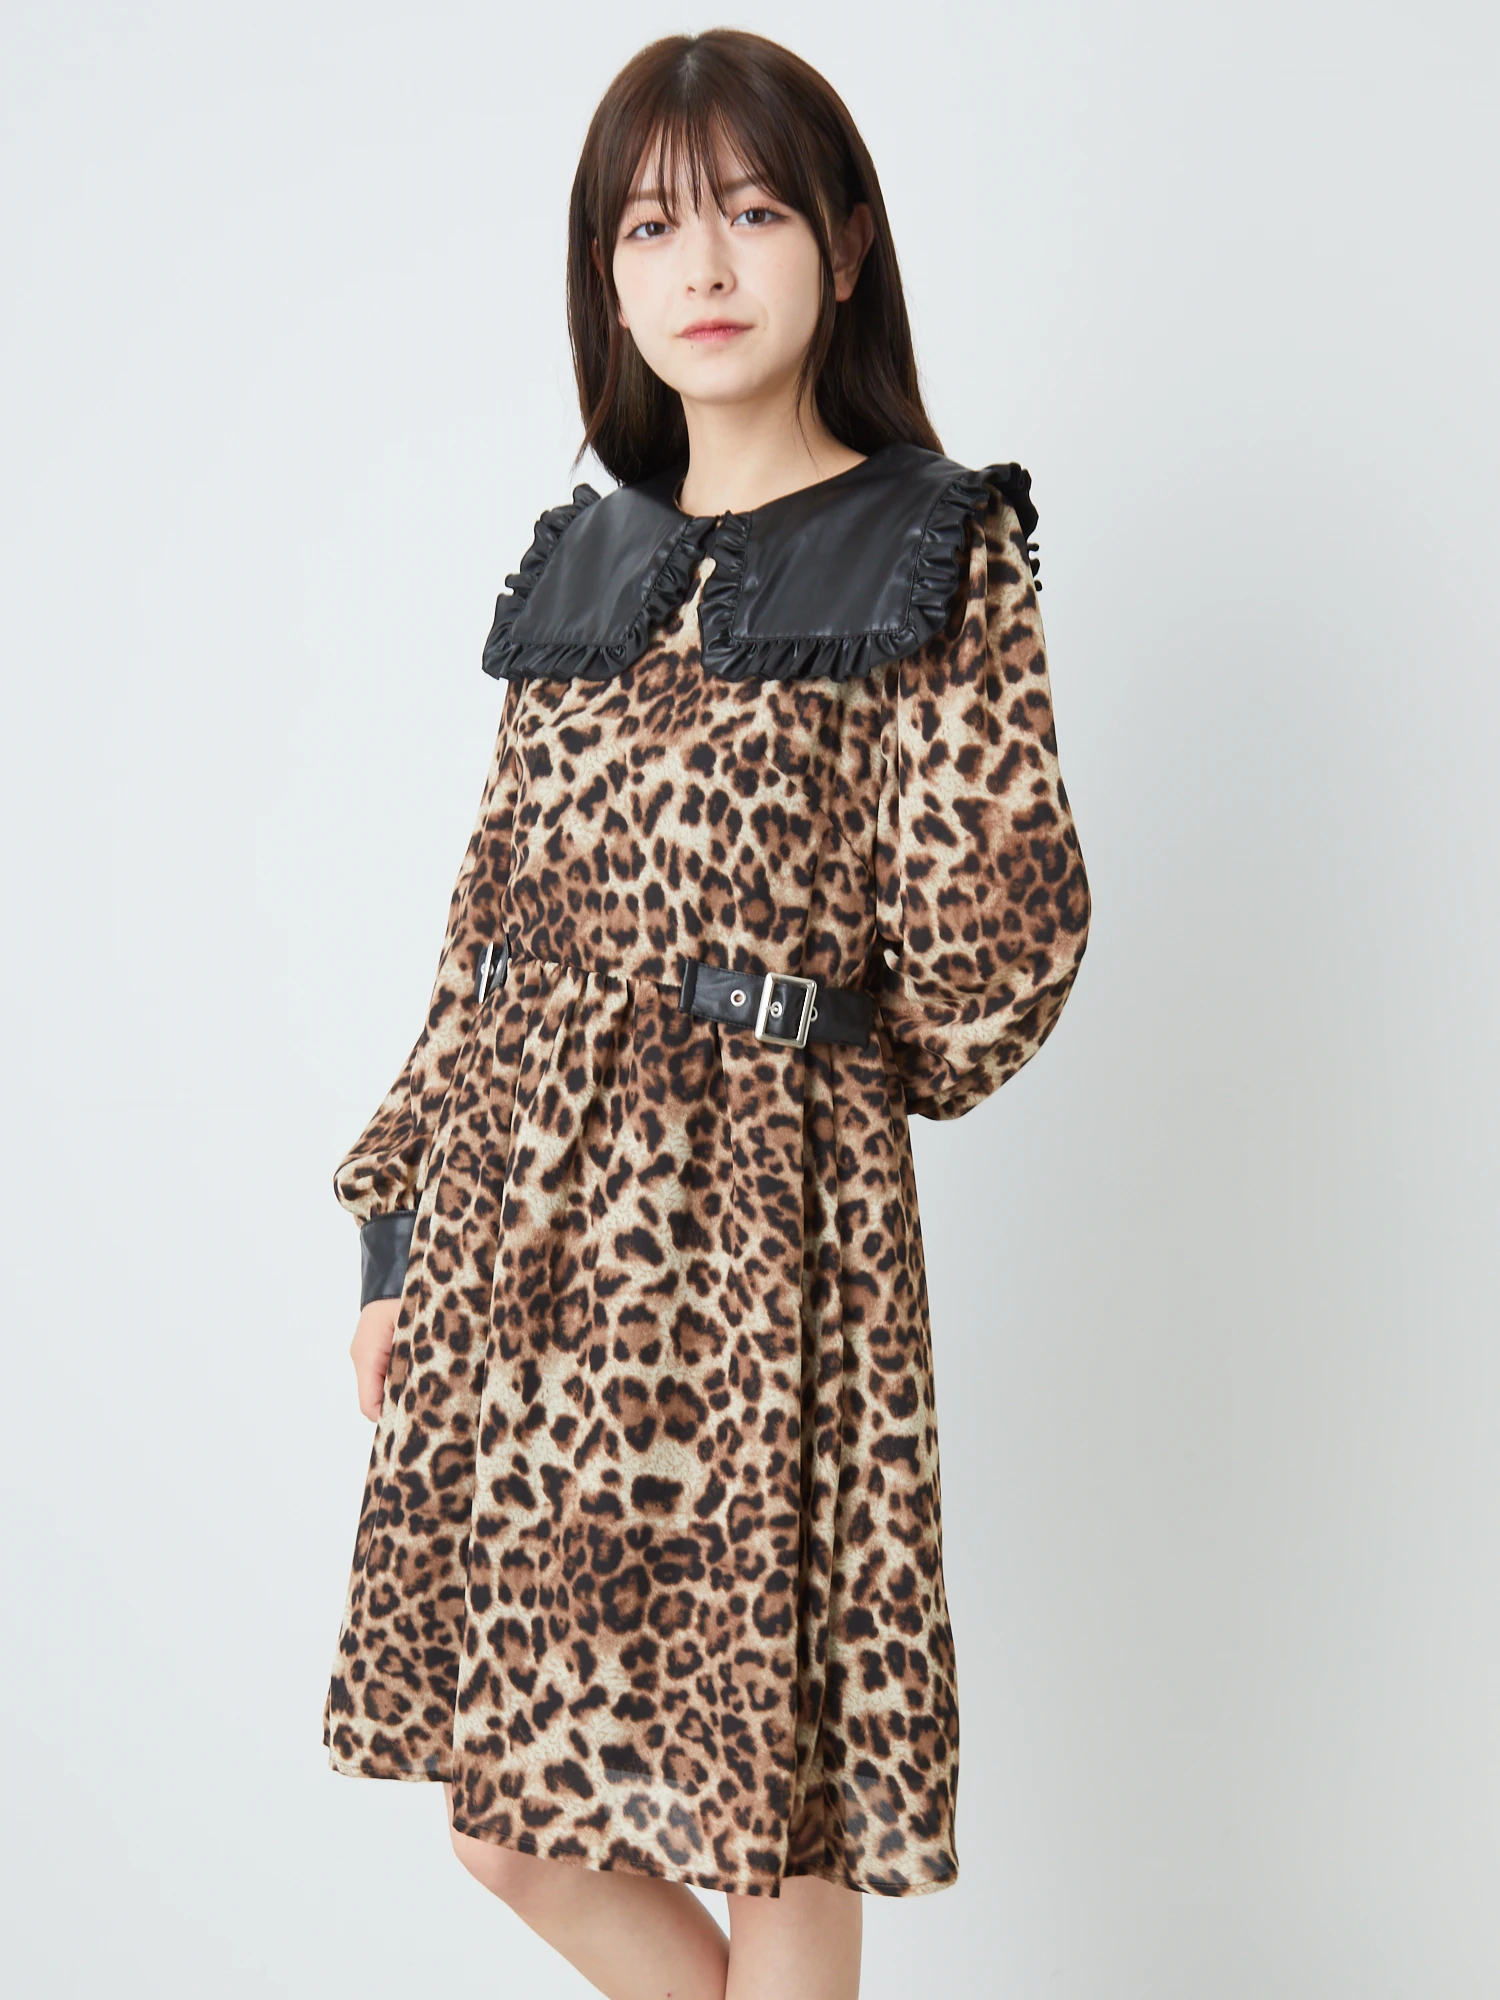 ACKA lady leopard one piece レオパード ワンピース